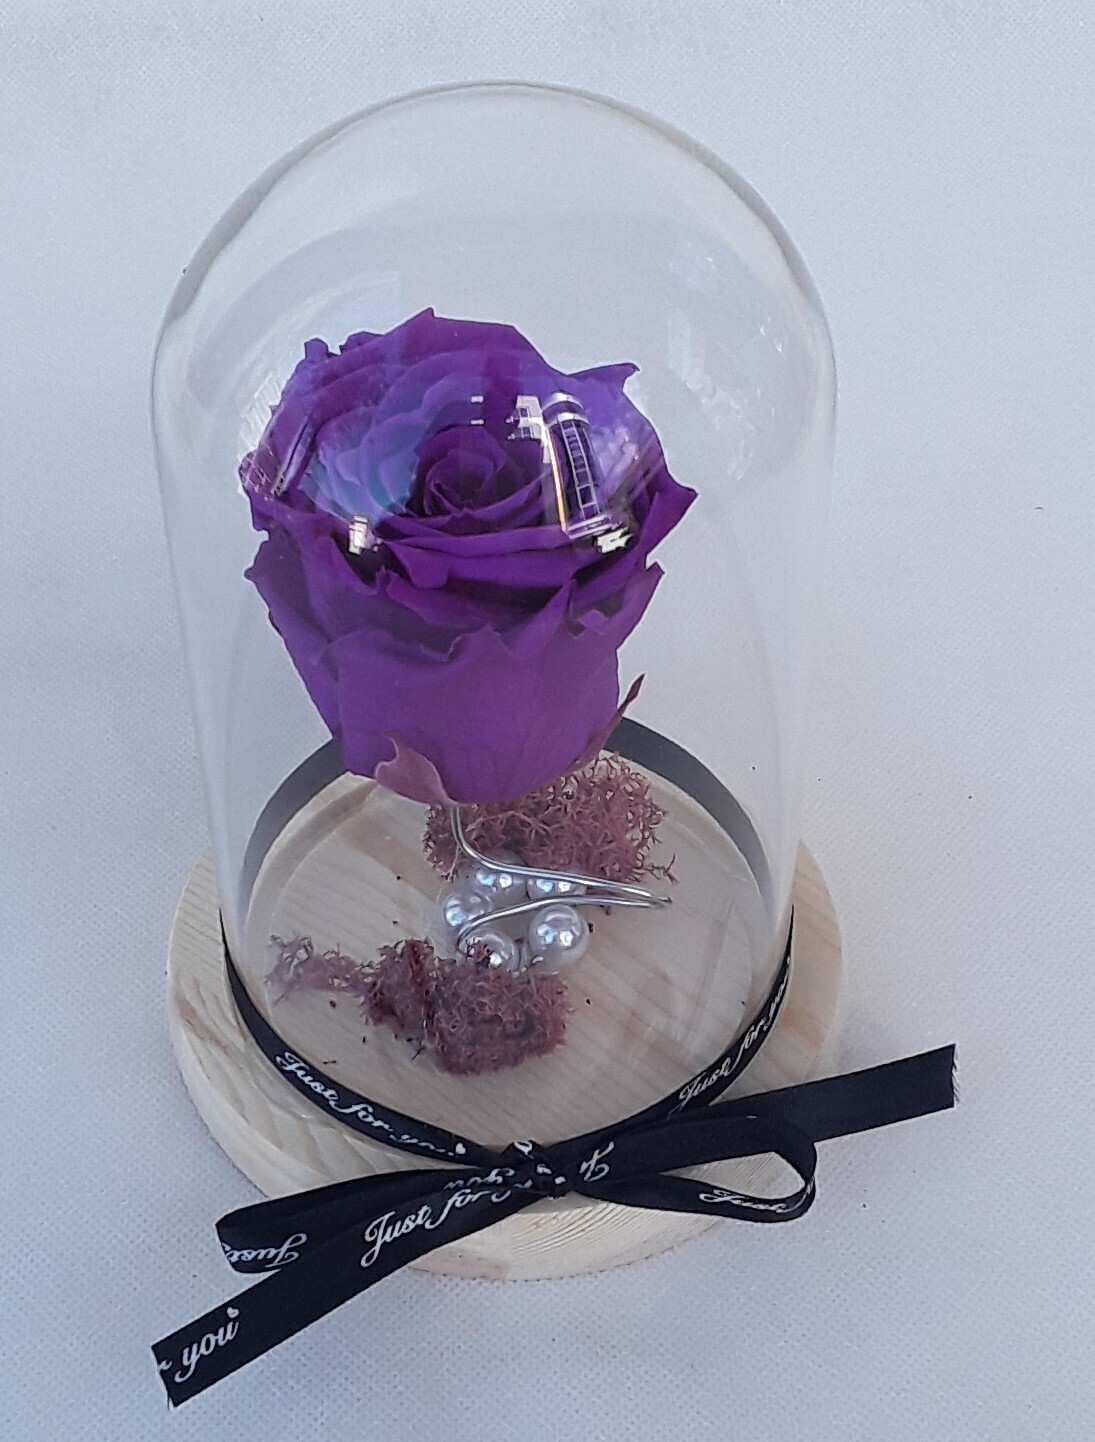 Forever purple rose!!!